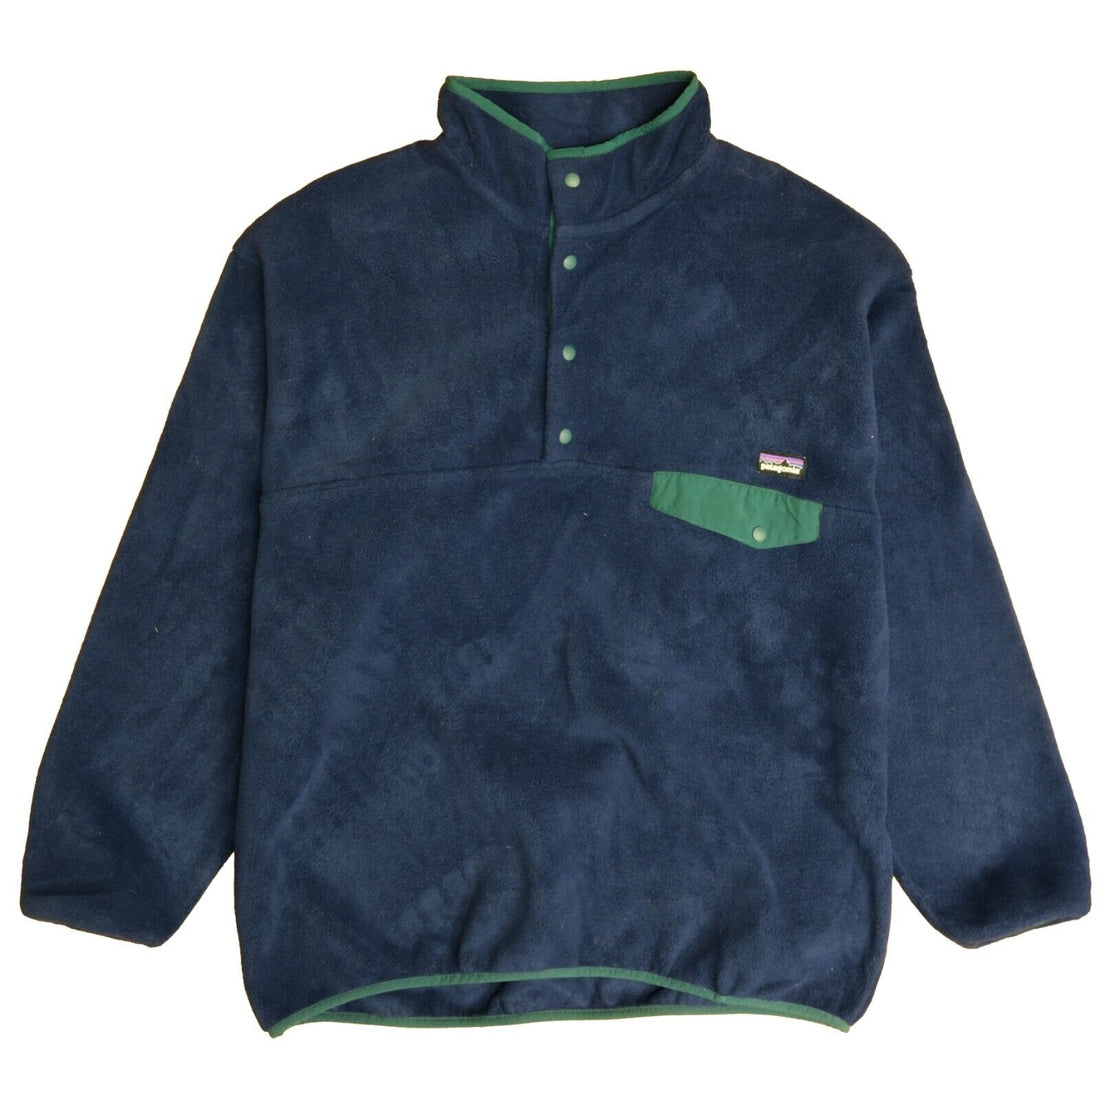 Patagonia Synchilla Snap-T Fleece Jacket Size XL Blue